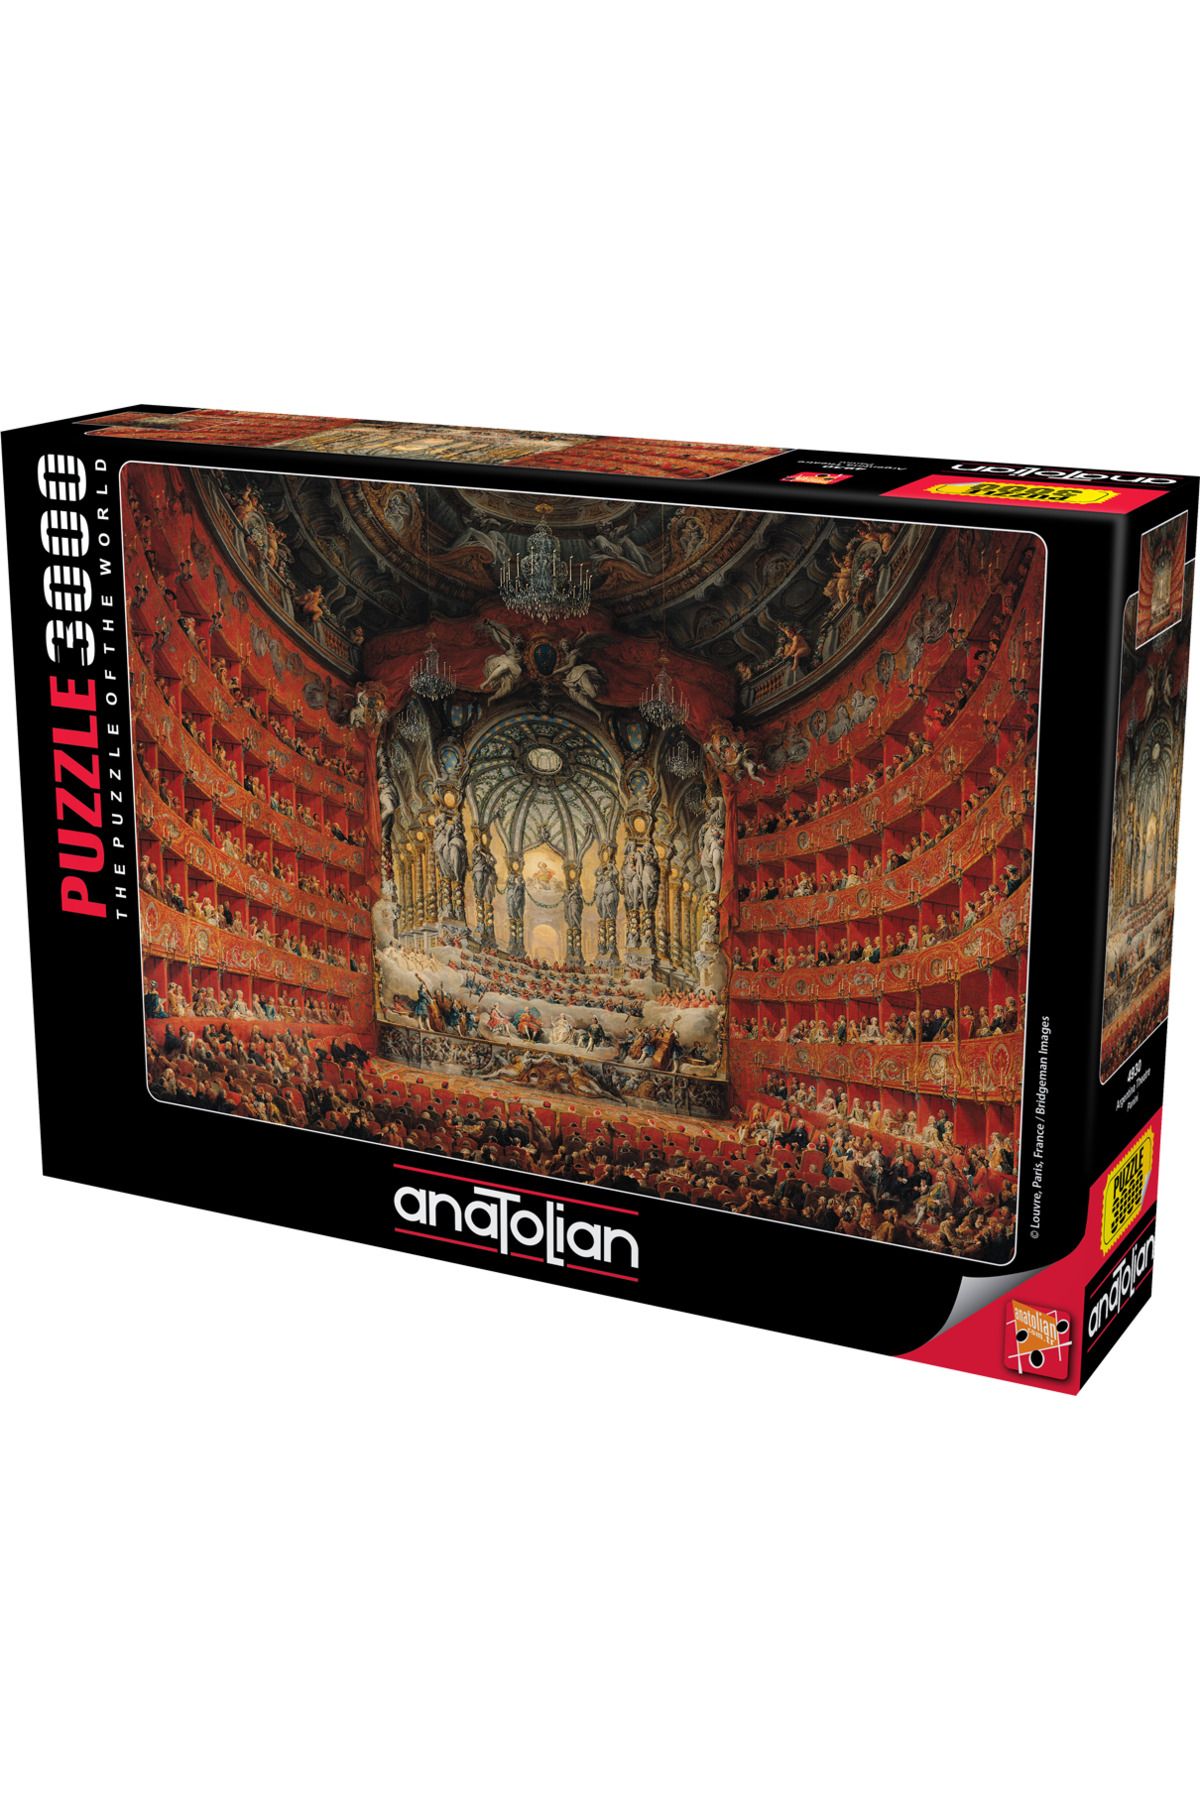 Anatolian Puzzle 3000 Parçalık Puzzle / Argentina Theatre - Kod:4930